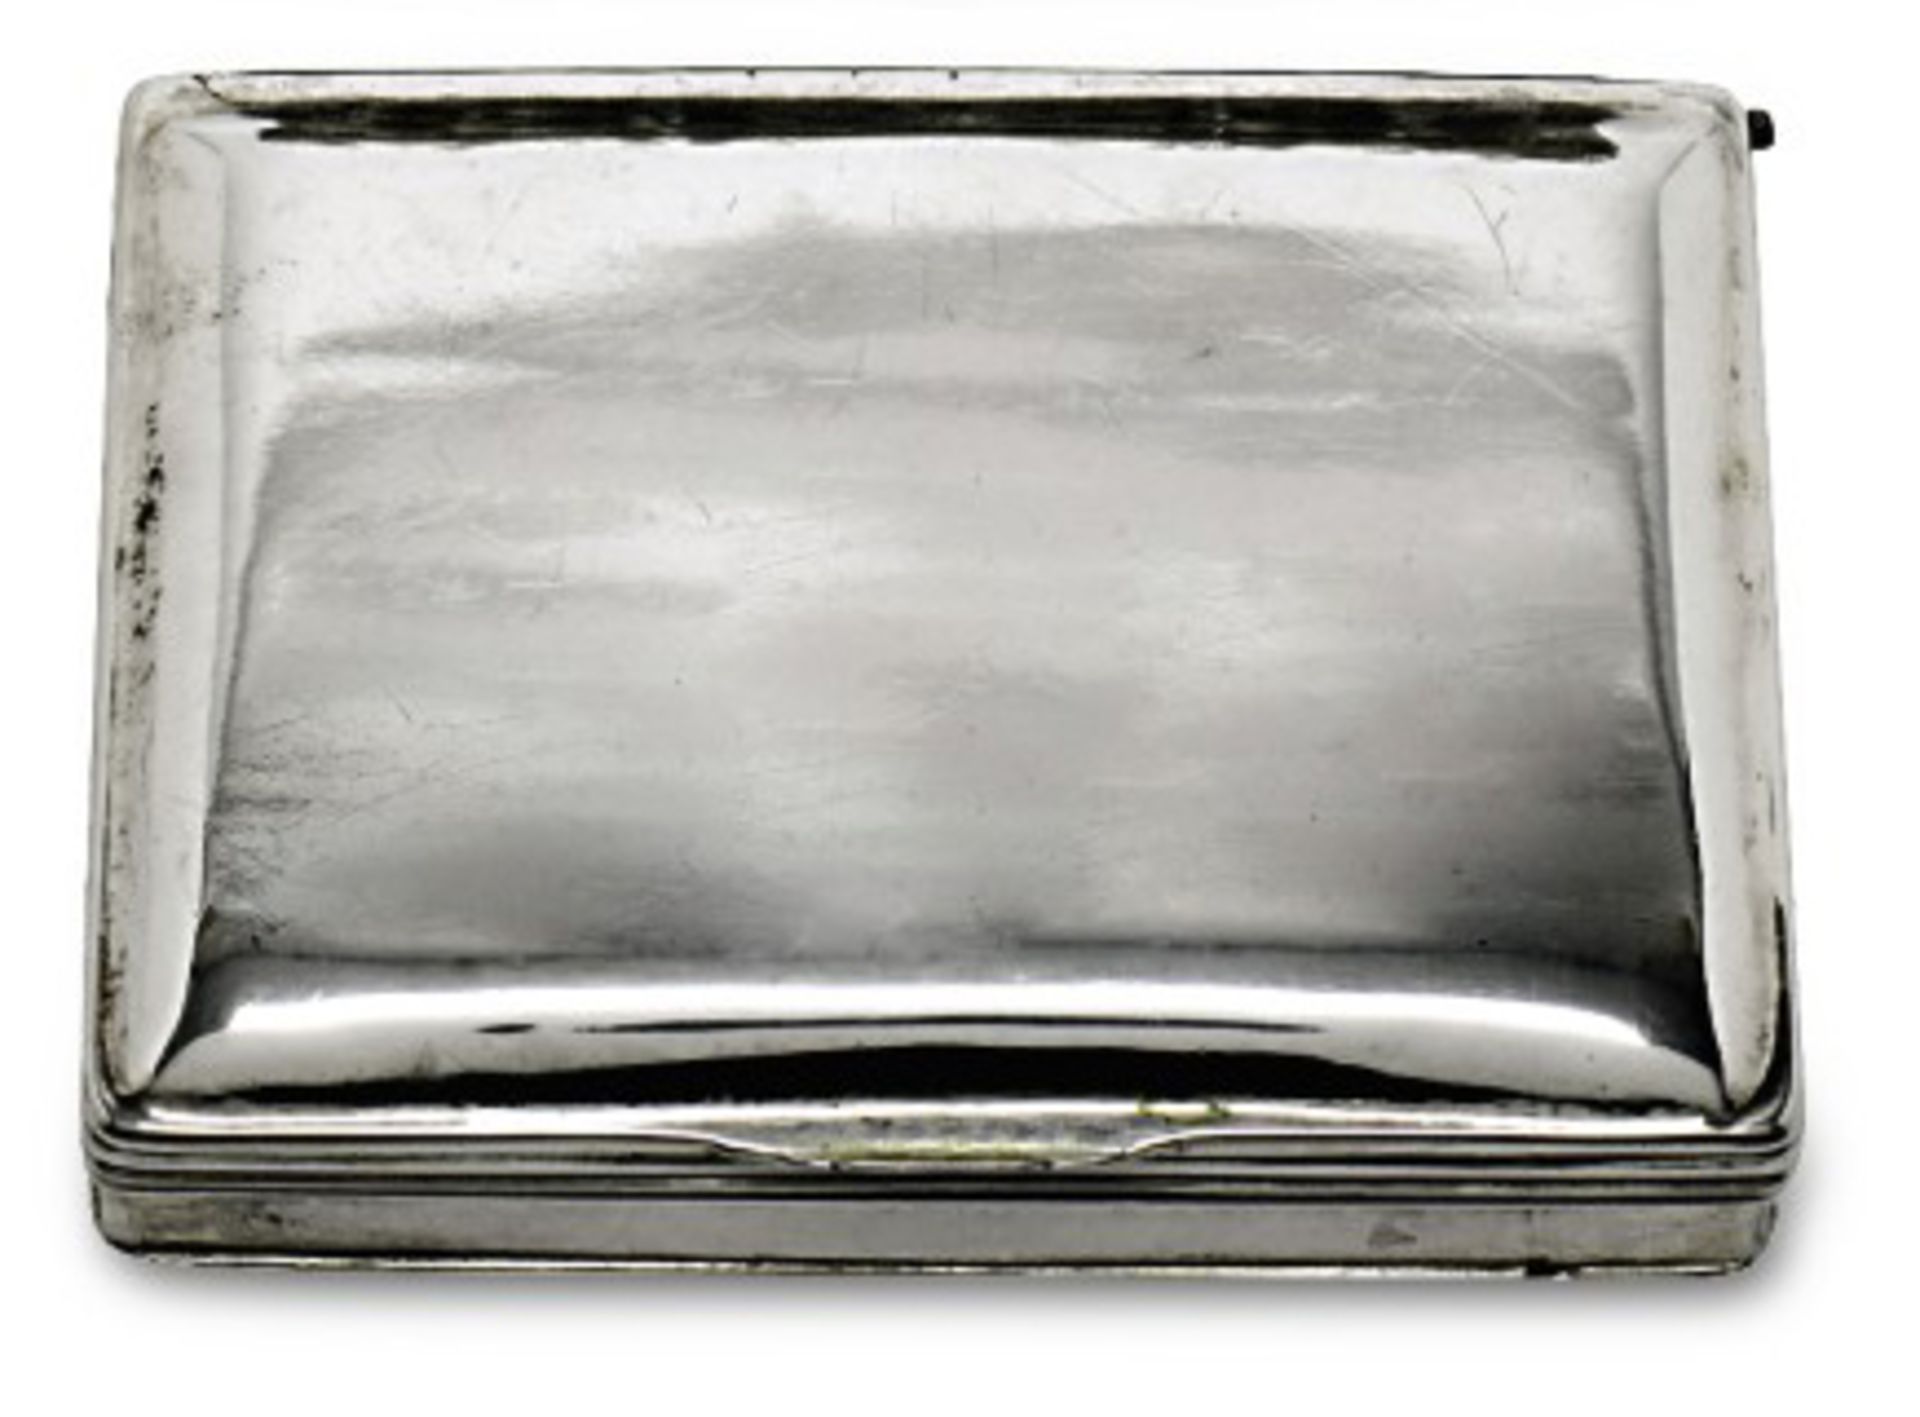 TabatièreSchwäbisch Gmünd, 2. Hälfte 18. Jh.Silber, innen vergoldet. Rechteckige Dose m